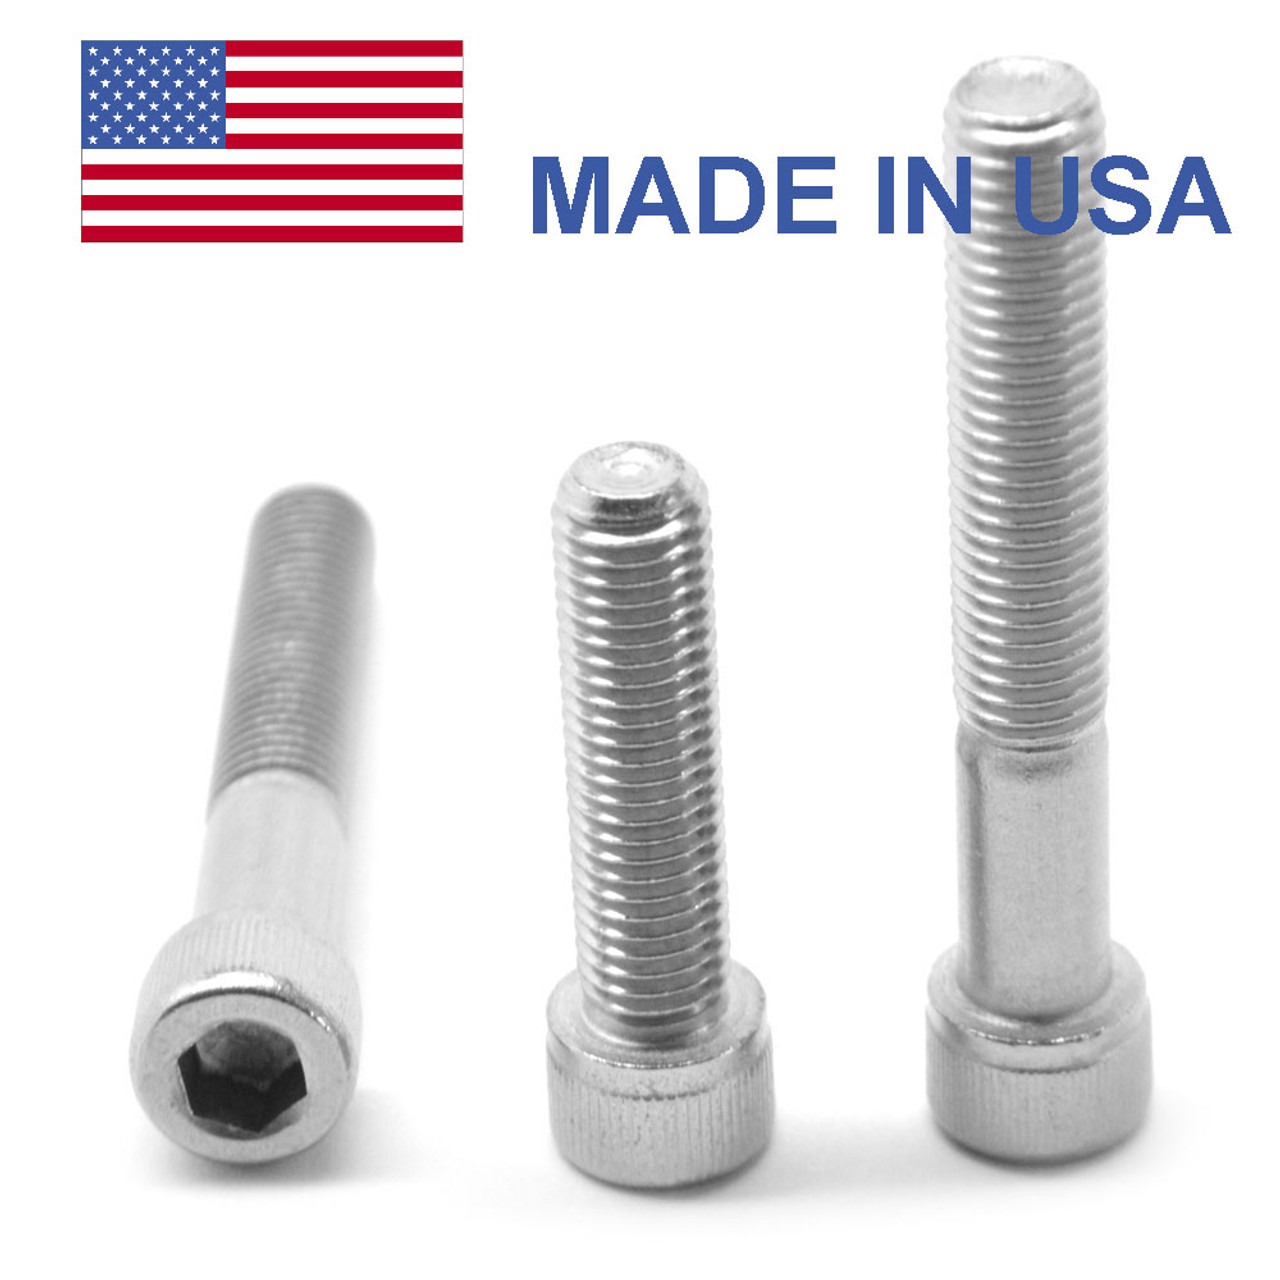 5/16-18 x 1 1/4 Coarse Thread Socket Head Cap Screw - USA Alloy Steel Zinc Plated